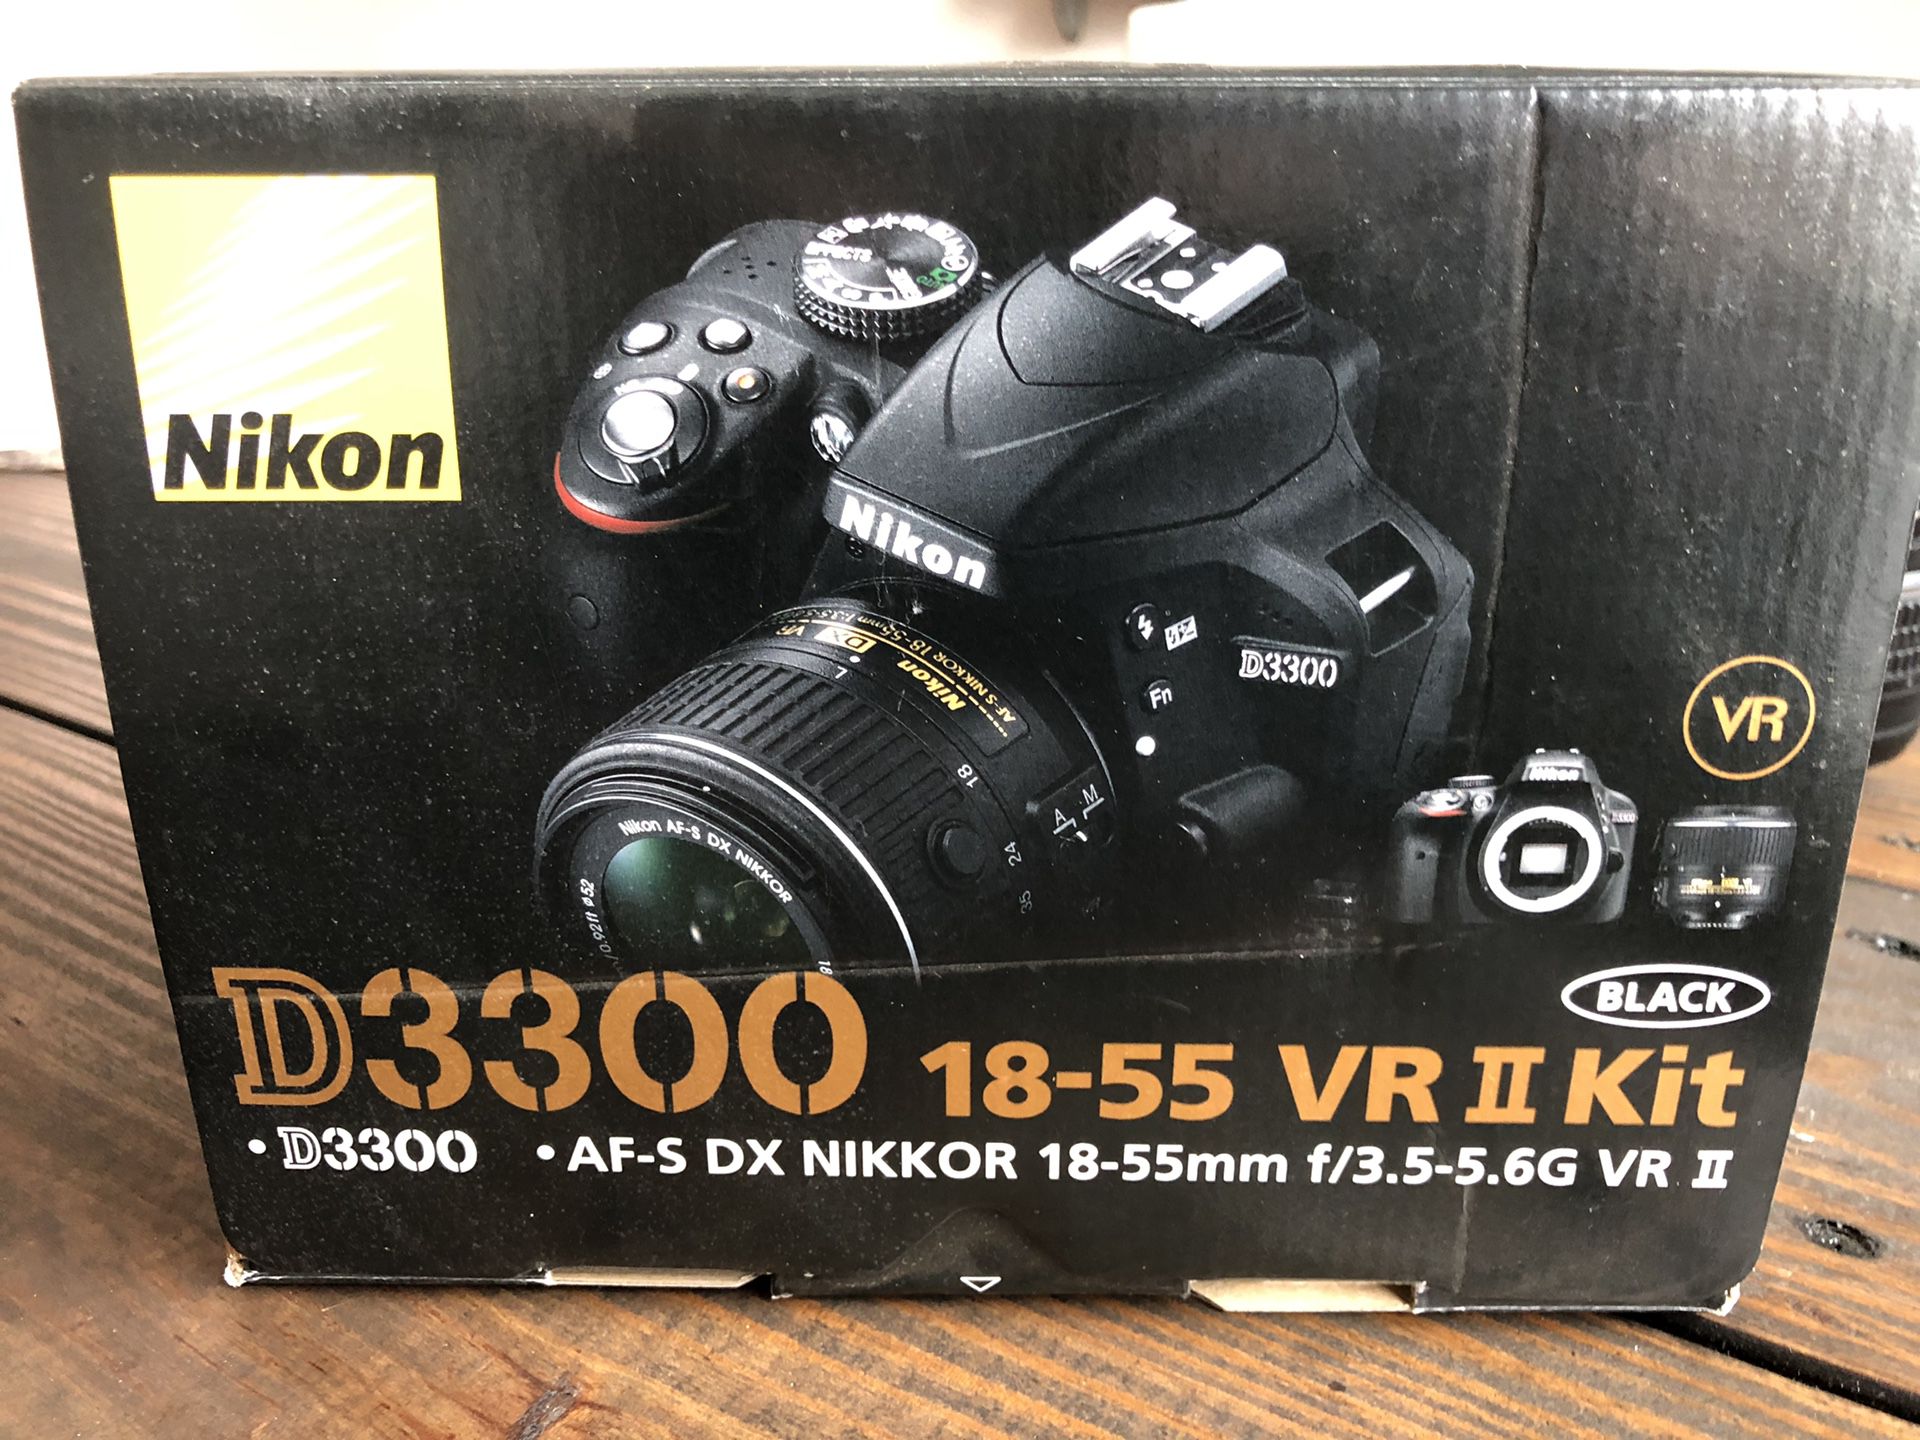 Nikon D3300 with kit lens